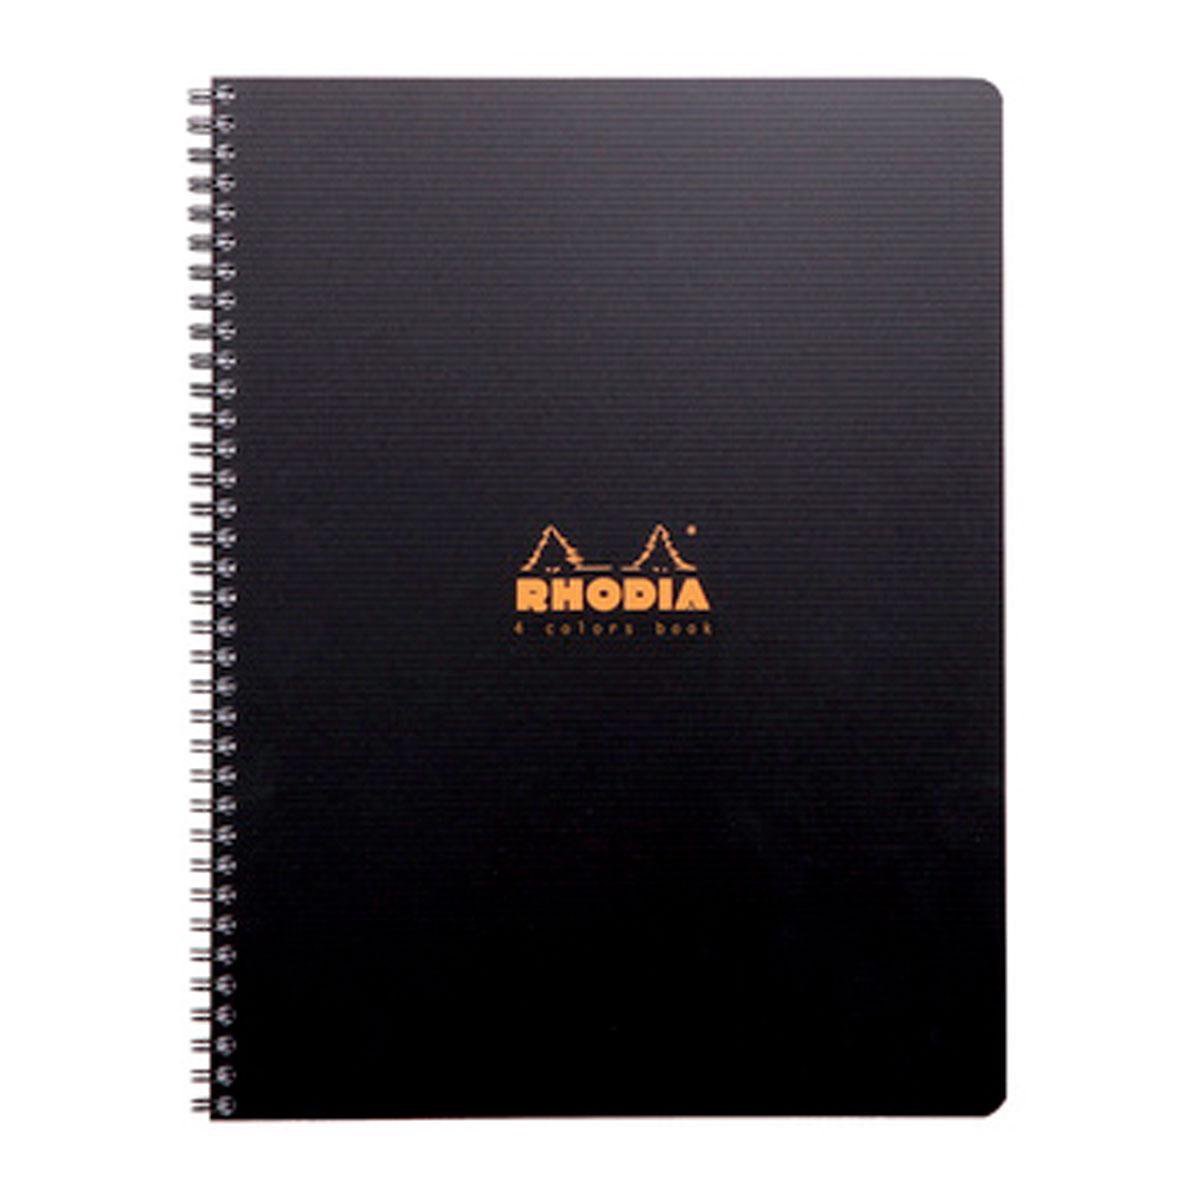 Rhodia 4 Colors Book – A4+ Gelinieerd